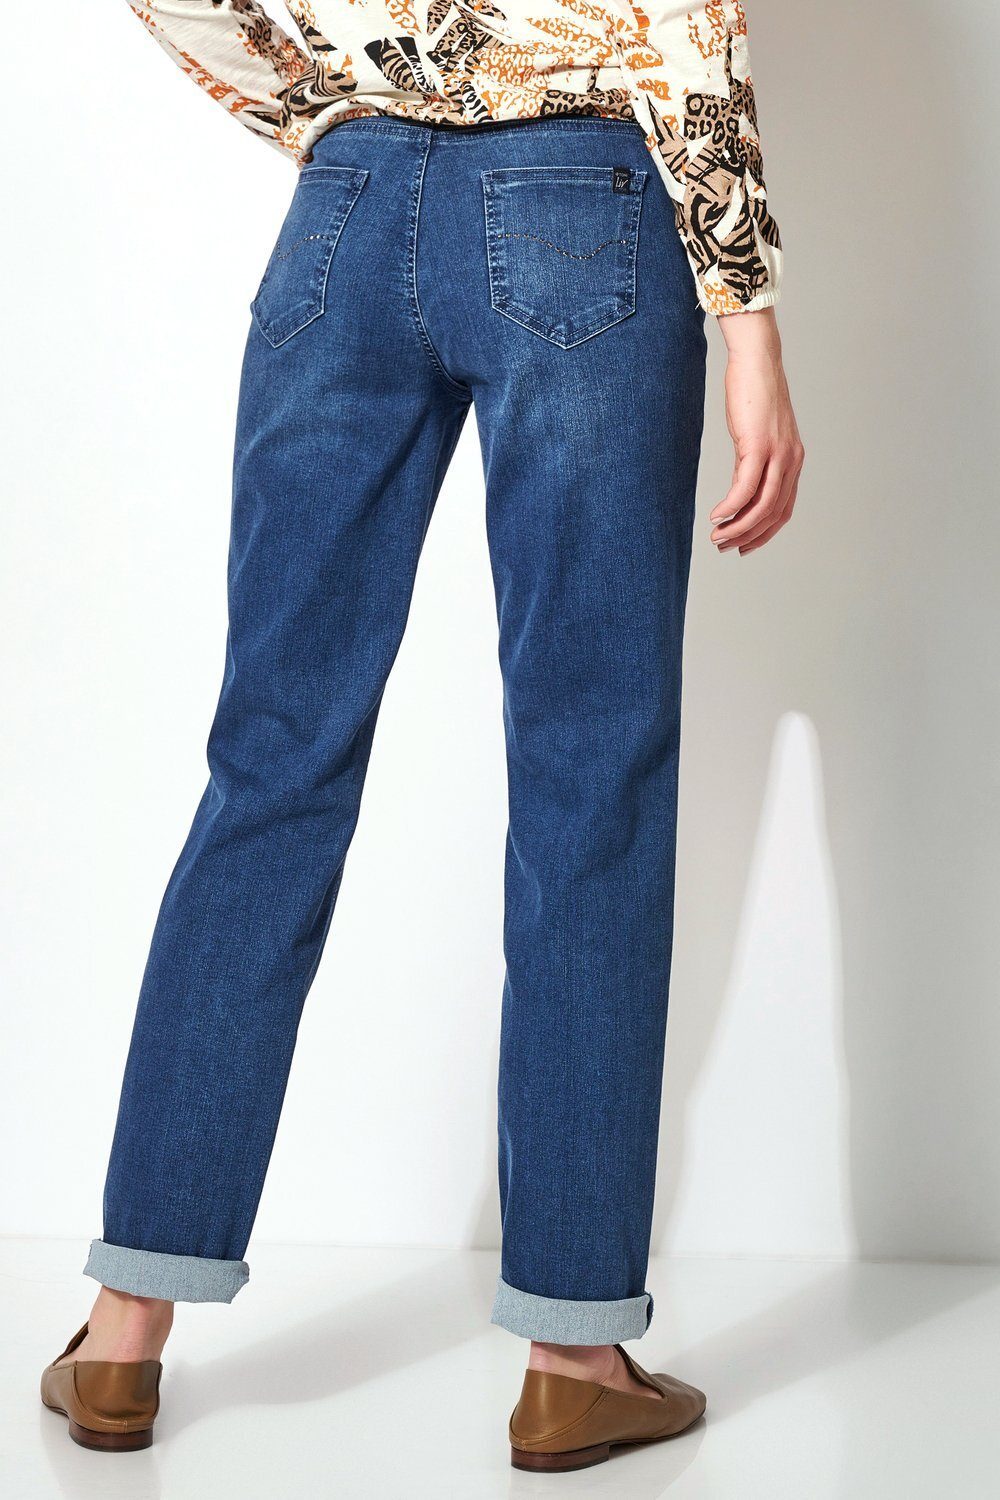 Liv 5-Pocket-Jeans Regular-Fit mittelblau - 552 TONI in